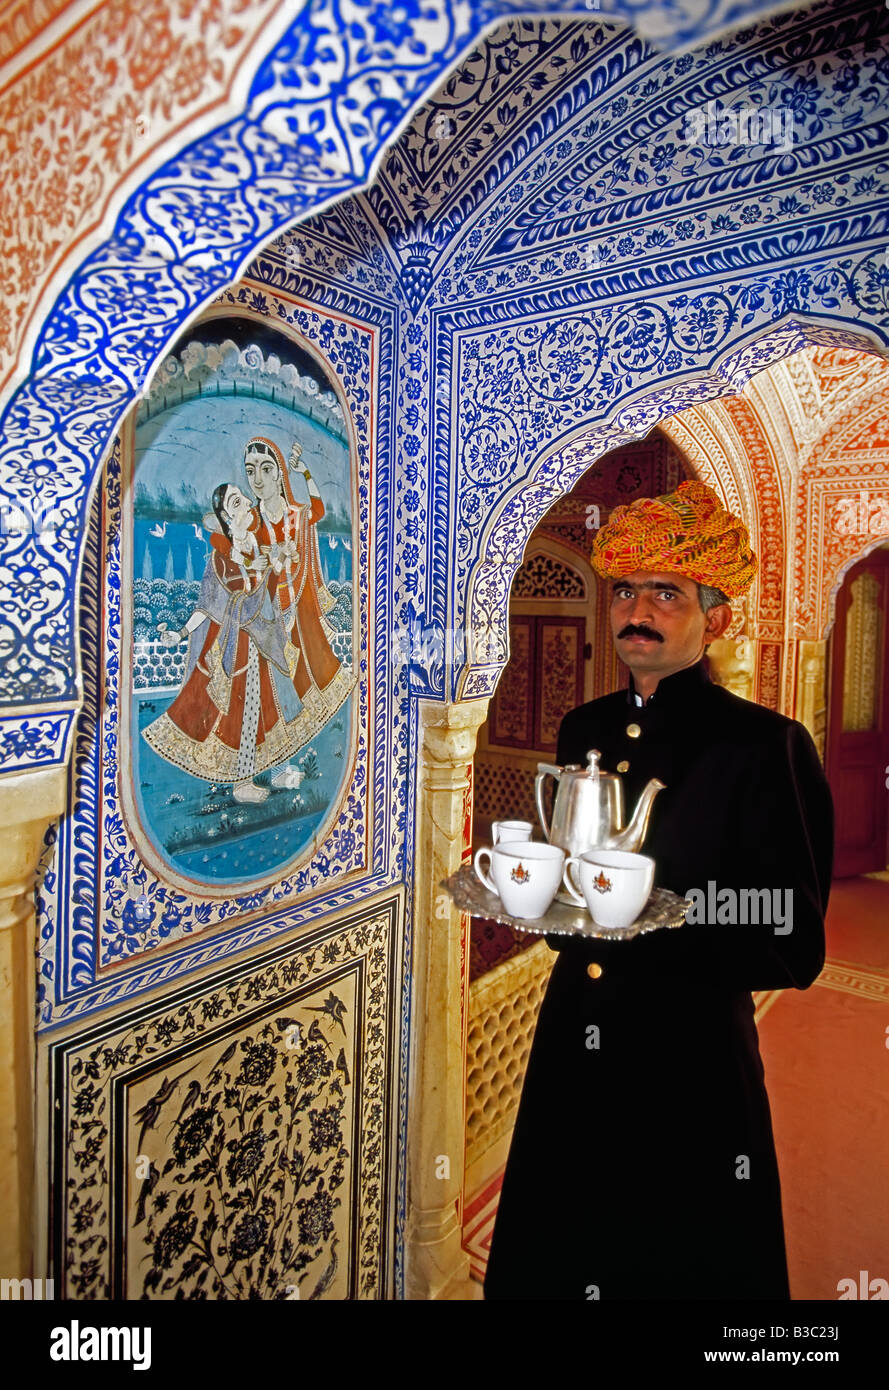 India, Rajasthan, Jaipur, Samode Palace, Waiter holding Tea Tray in ornate passageway -  Model and Property released Stock Photo